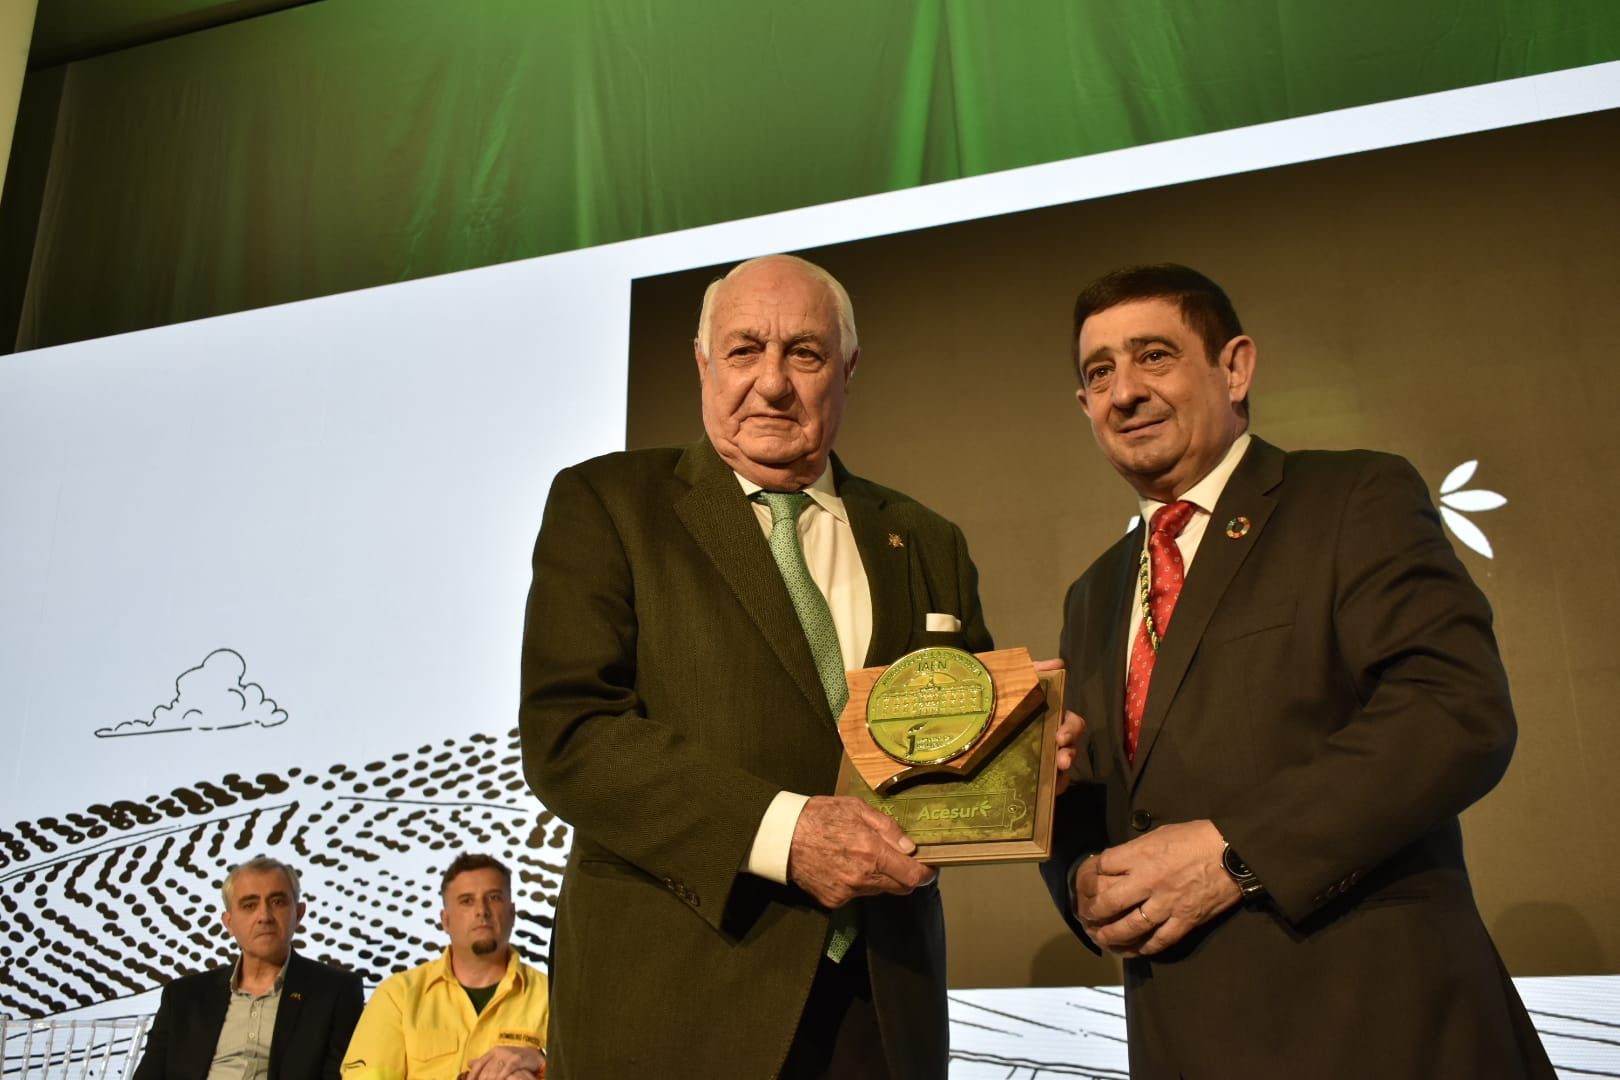 Francisco Reyes le entrega el premio a Juan Ramón Guillén, presidente de Acesur